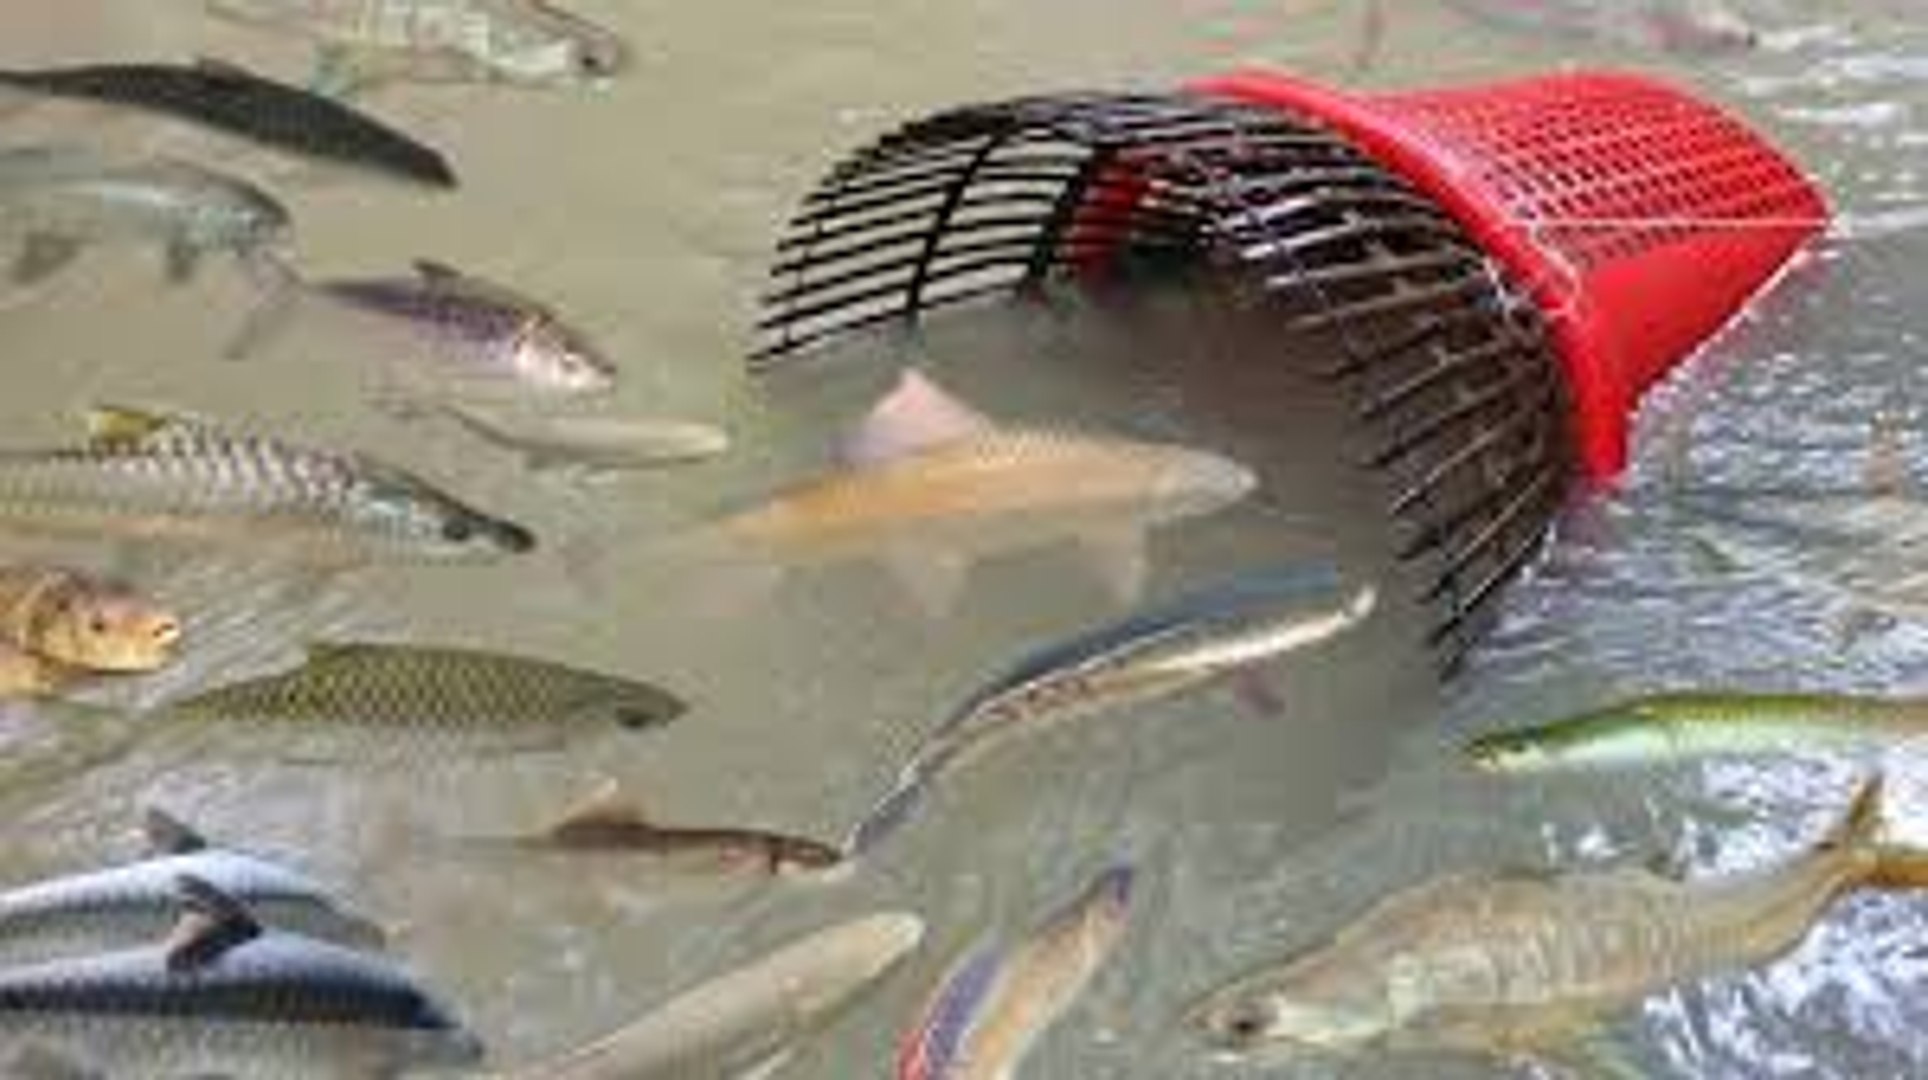 Creative Girl Make Fish Trap Using Plastic Bottle - Basket